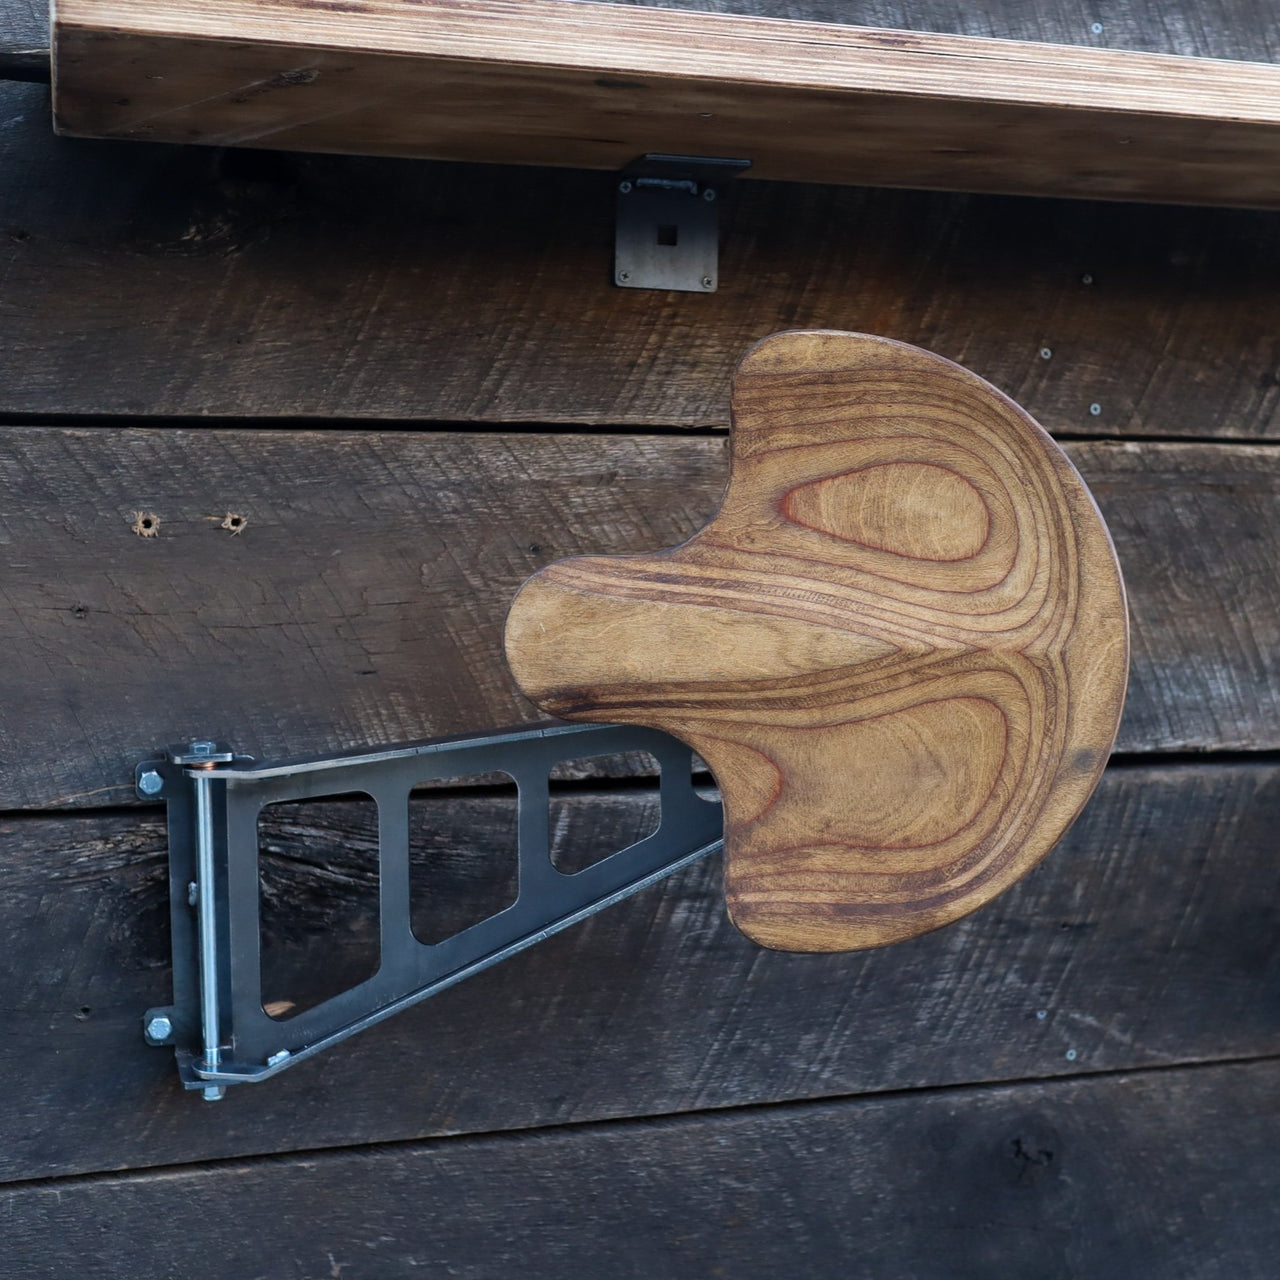 Metal Swing Away Bar Stool With Wooden Seat - 17.5" Swing Arm - Rectangle Design